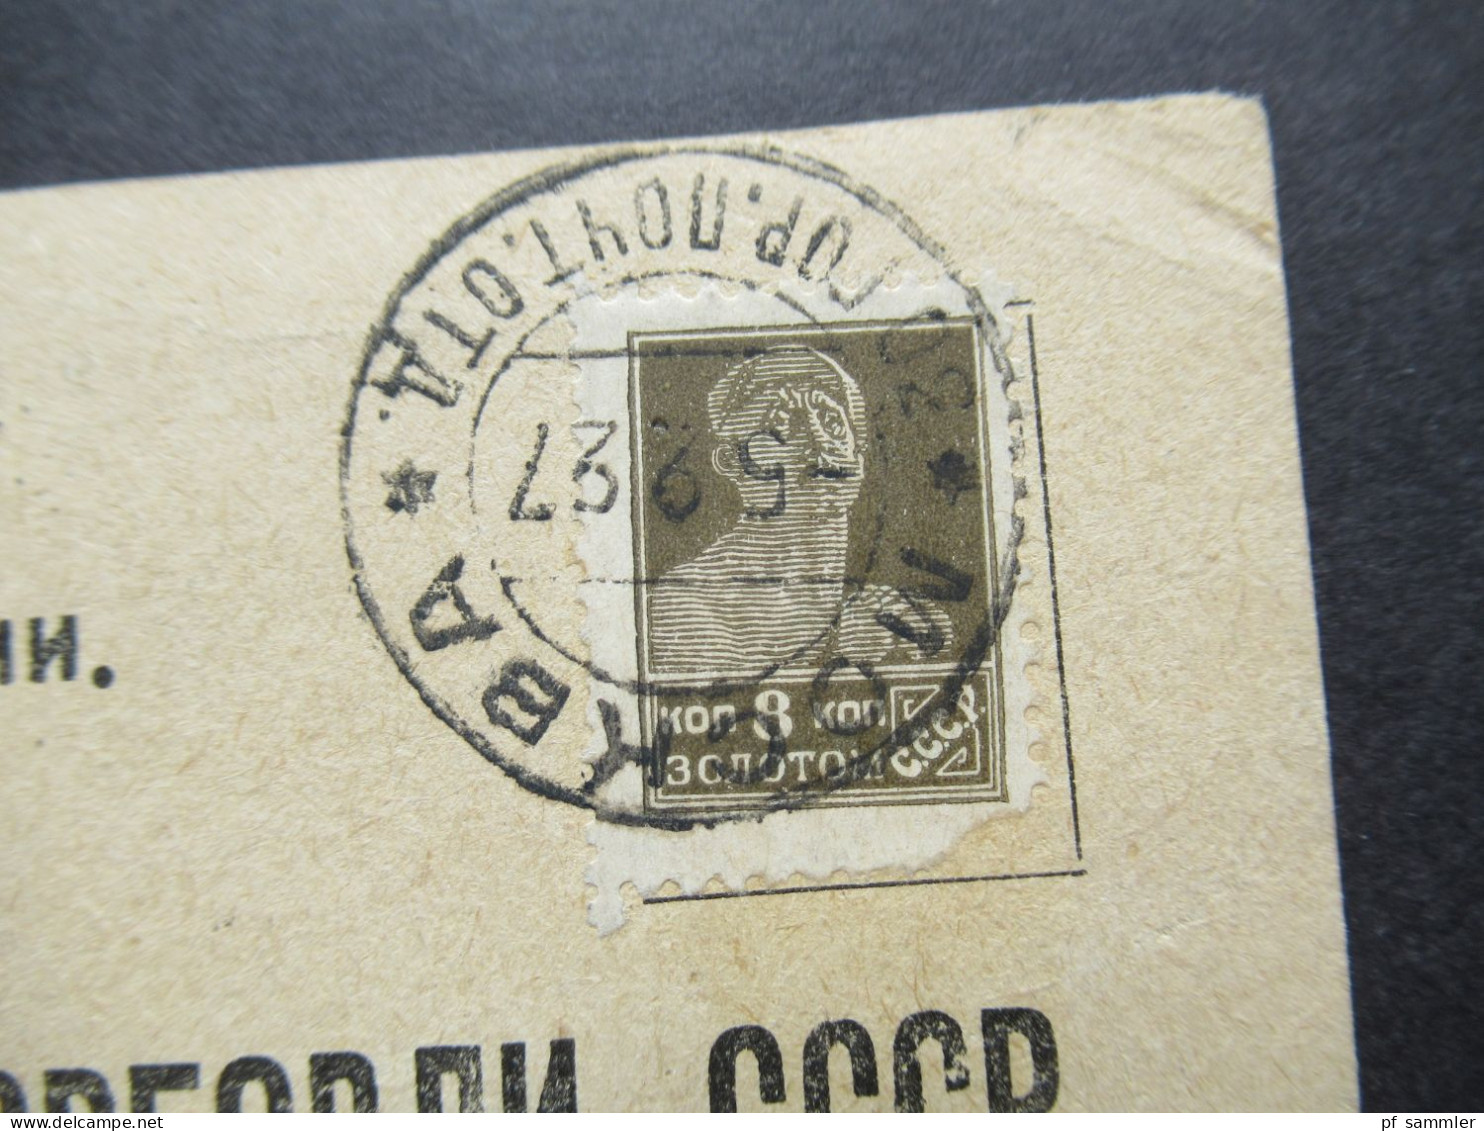 UdSSR 1937 Bedruckte Postkarte Rücks. Stempel M.L. Blitzstein Co Philadelphia Mit Revenue / Stempelmarke! - Covers & Documents